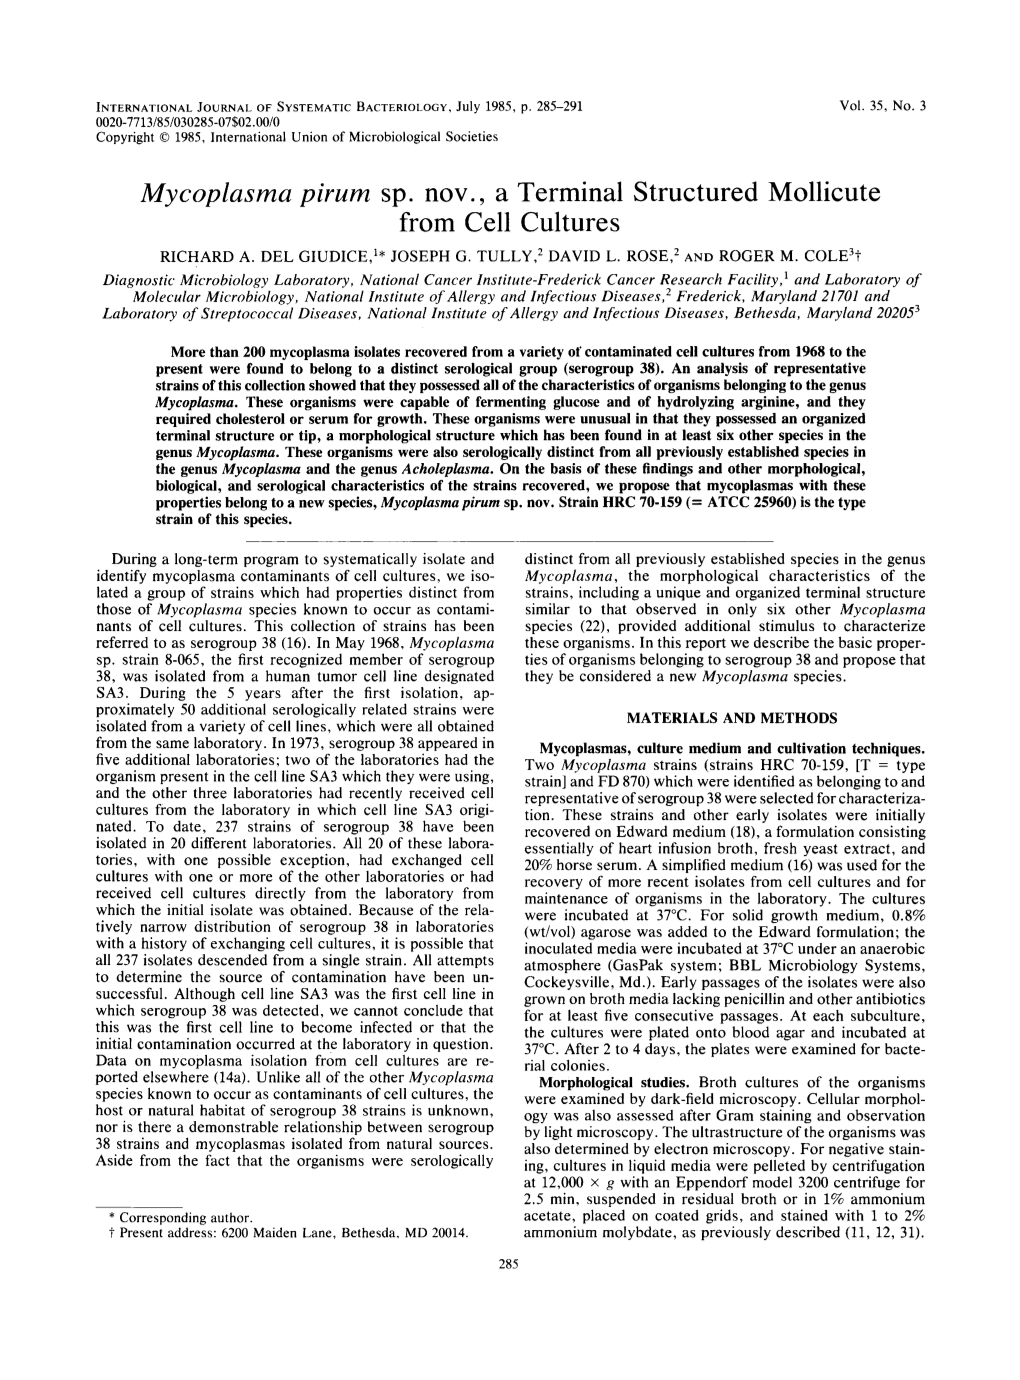 Mycoplasma Pirum Sp. Nov. a Terminal Structured Mollicute from Cell Cultures